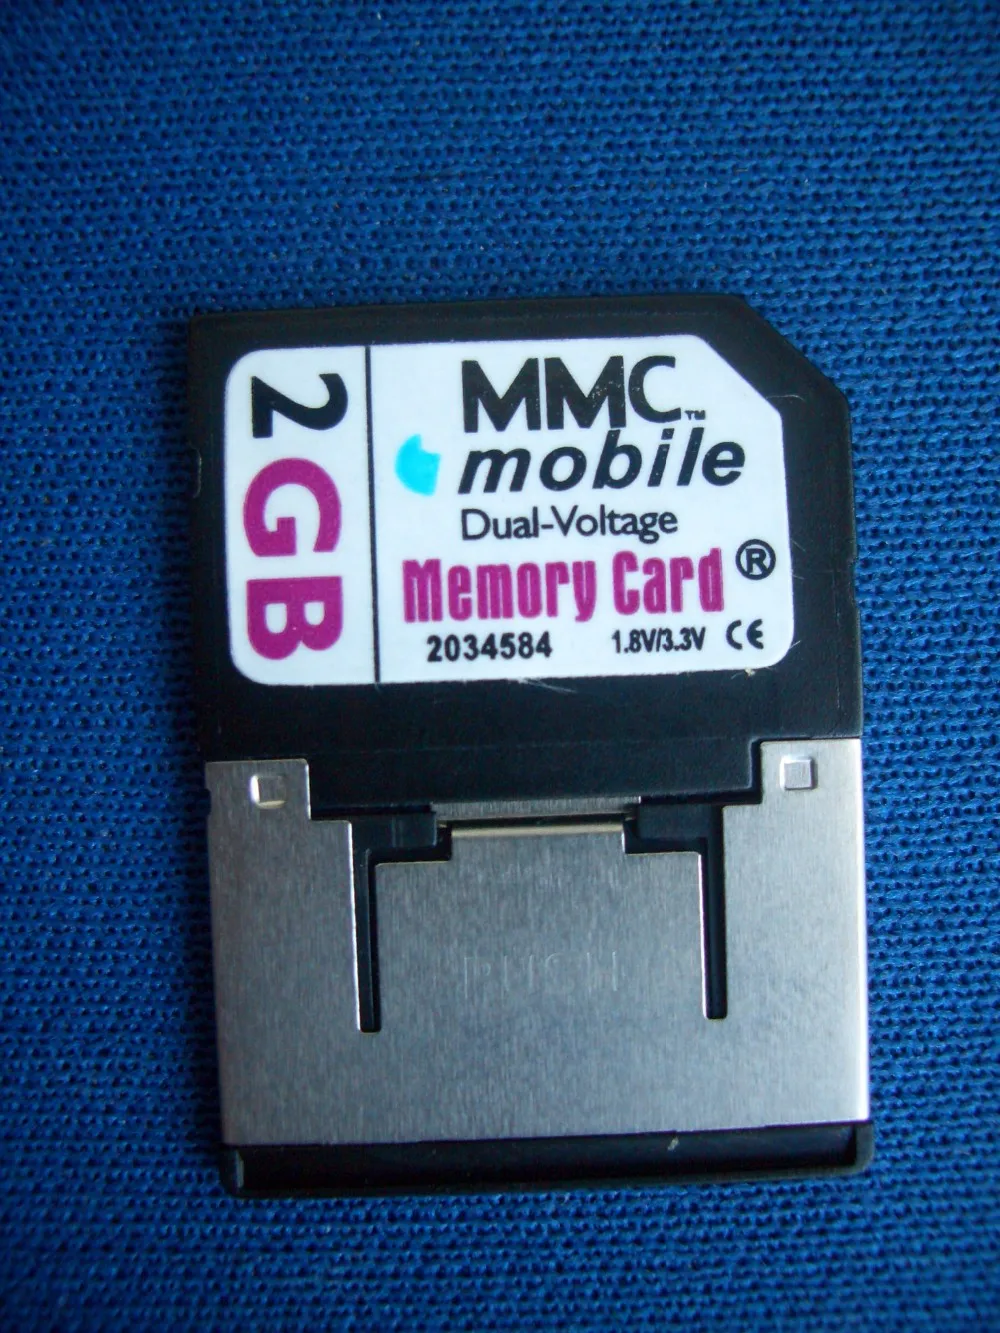 Wholesale Cheap Dv Rs Mmc 1gb 2gb Rs Mmc Plus Mobile Memory Card Buy 2gb Rs Mmc Card Memory Card Mmc Card Product On Alibaba Com